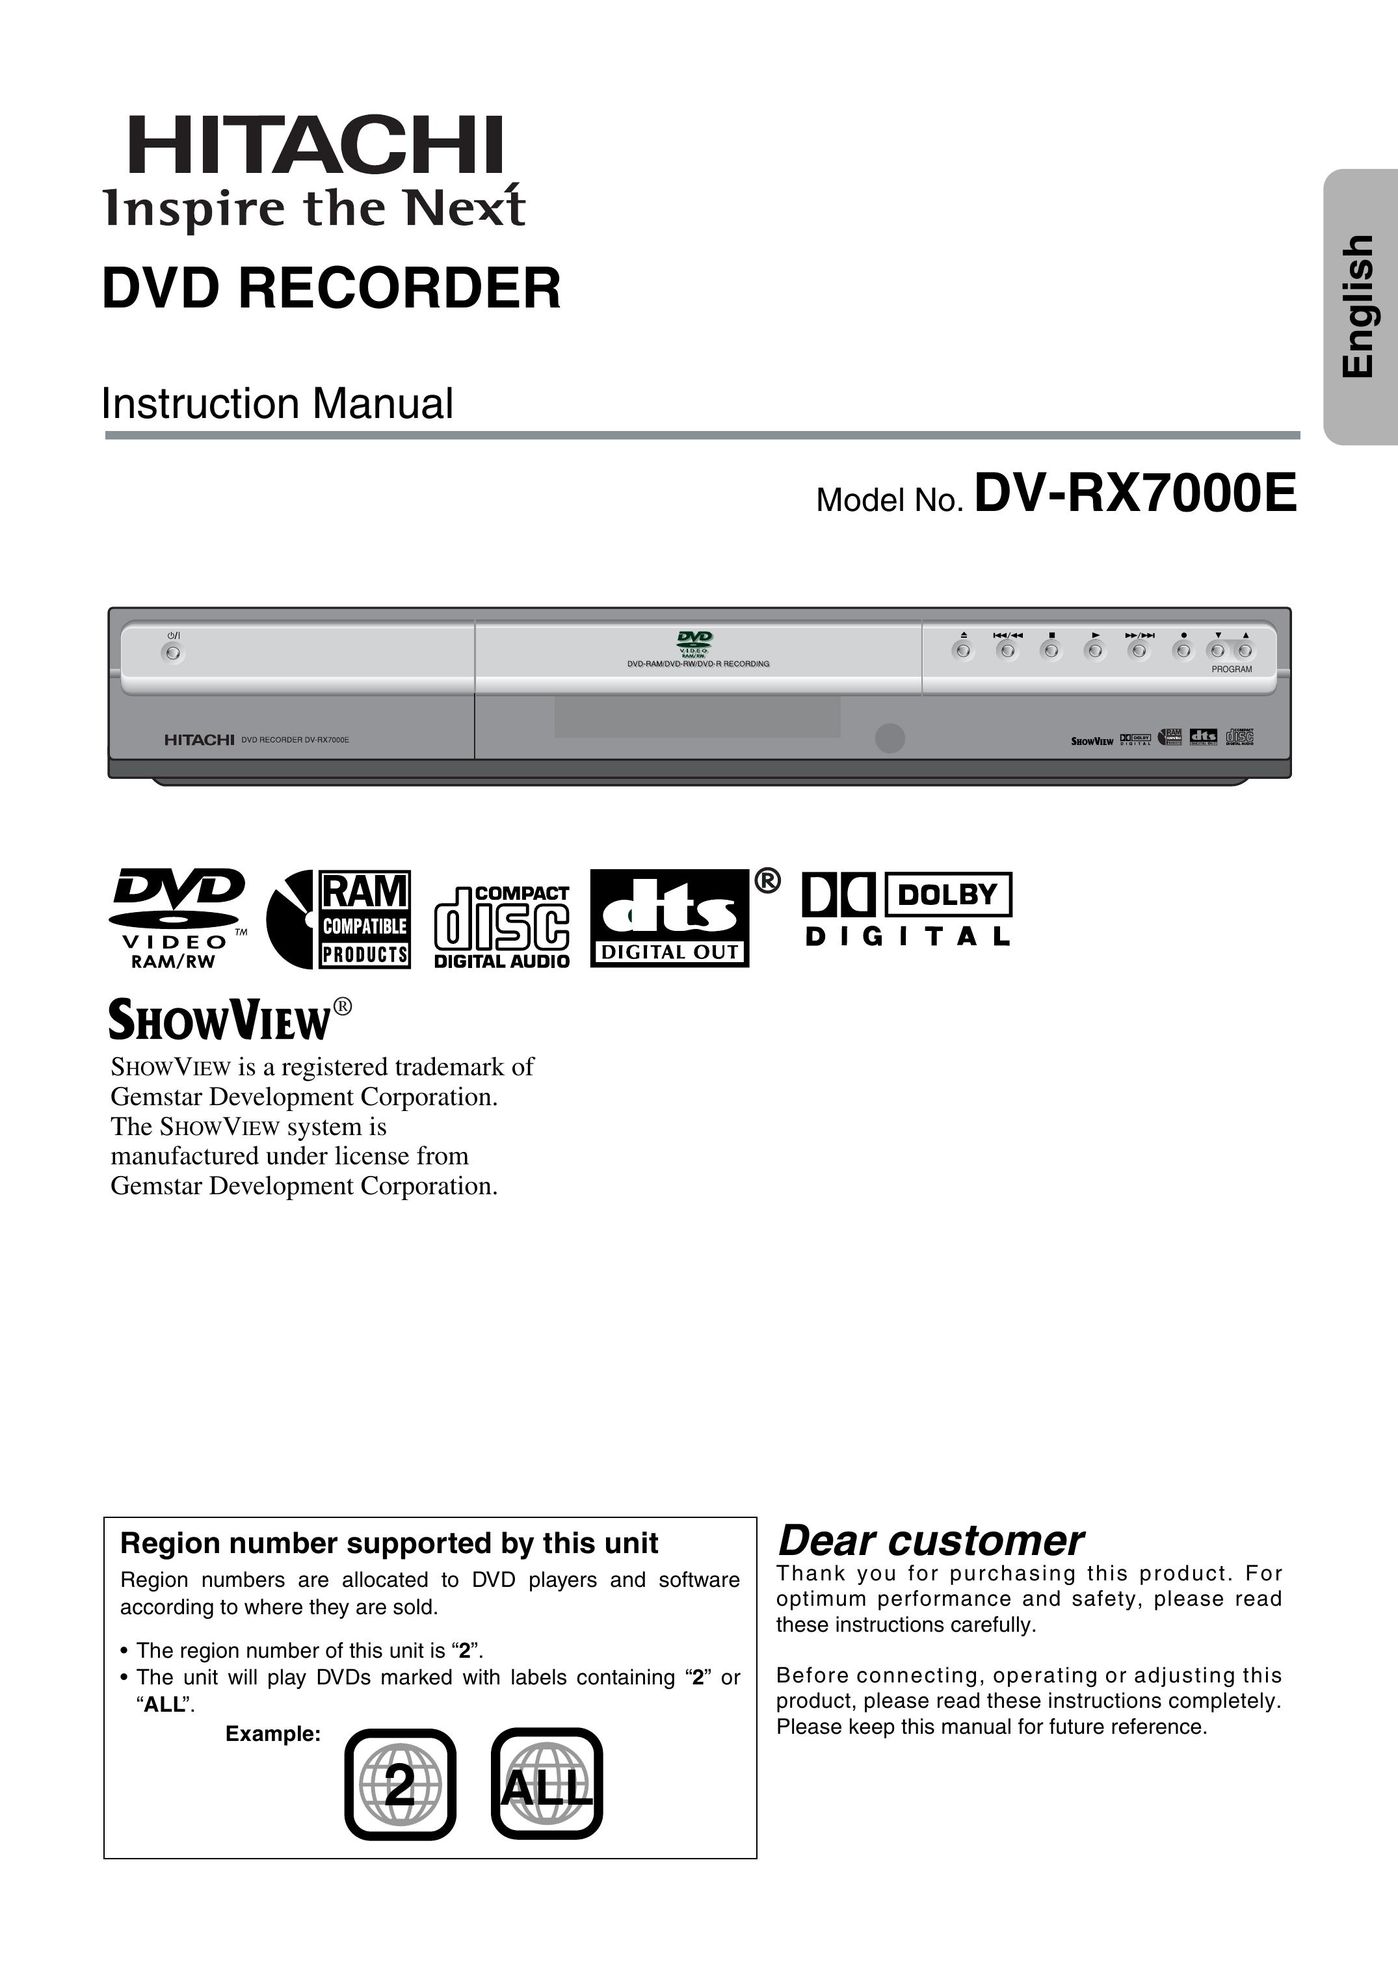 Hitachi DV-RX7000E DVD Recorder User Manual